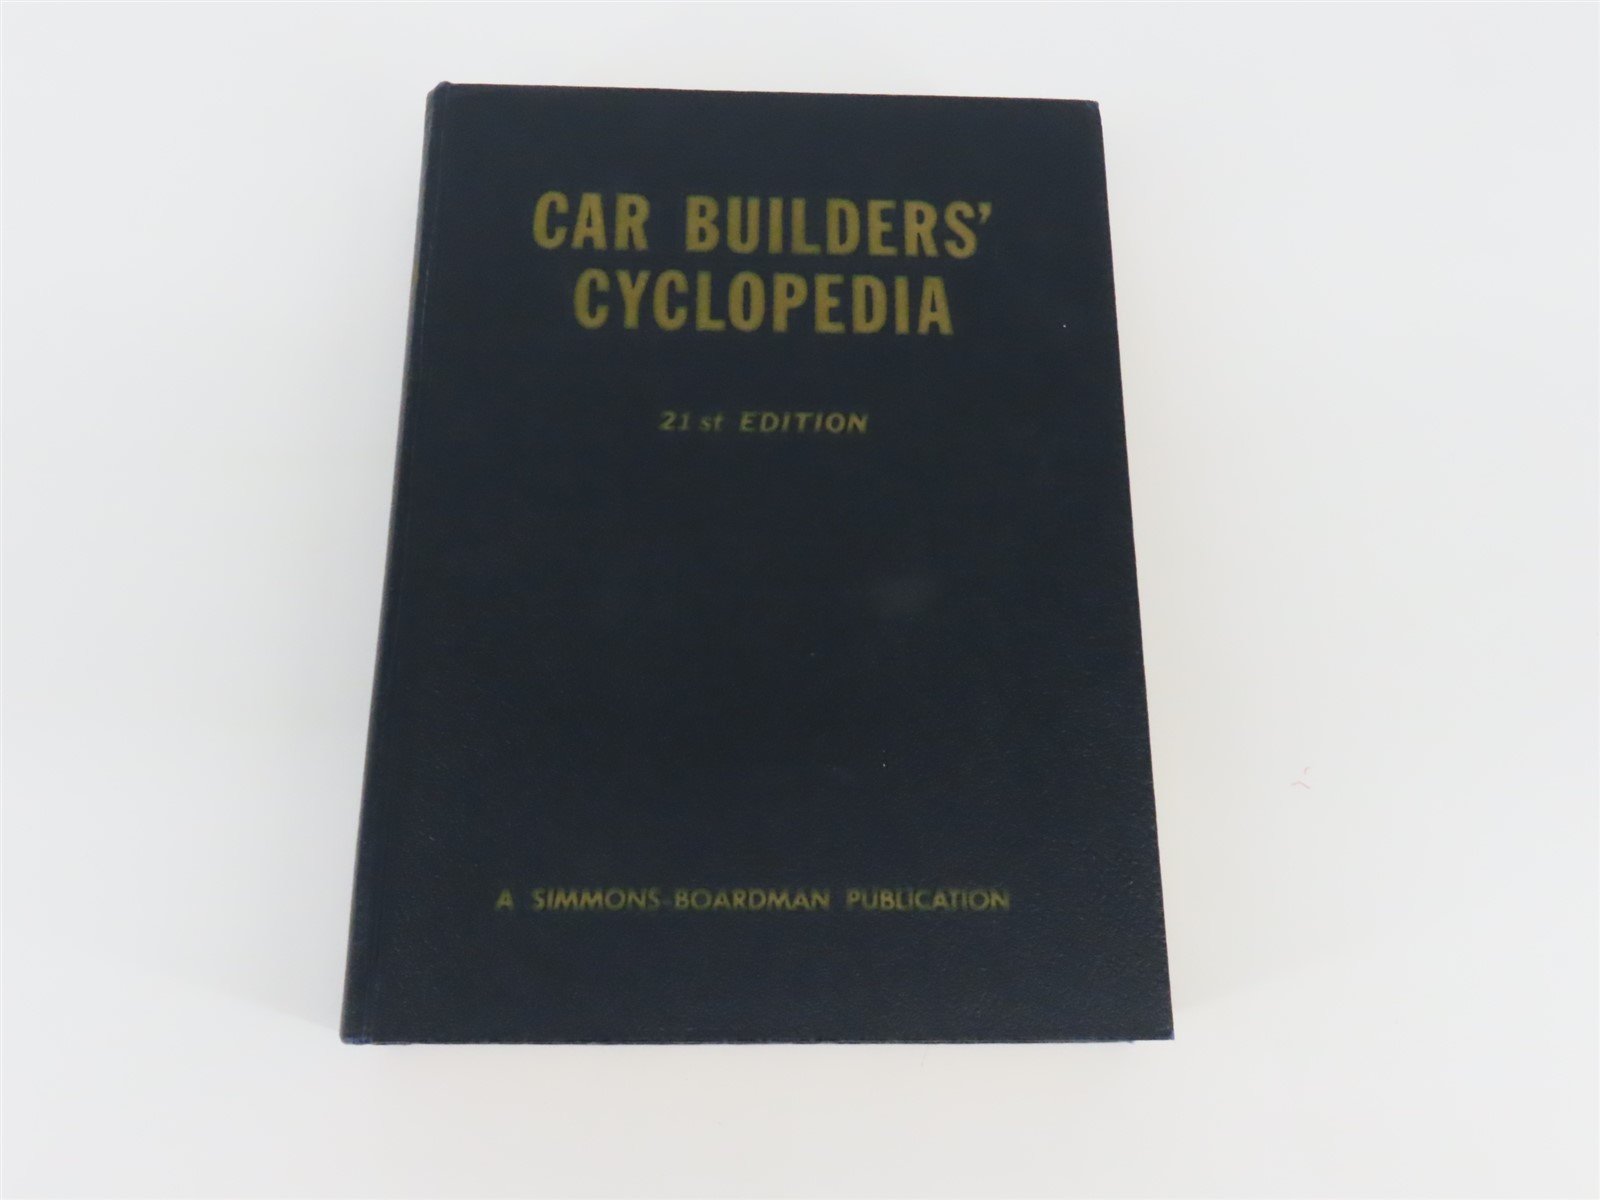 Car Builders' Cyclopedia 21st Edition - A Simmons-Boardman Publication ©1961 HC